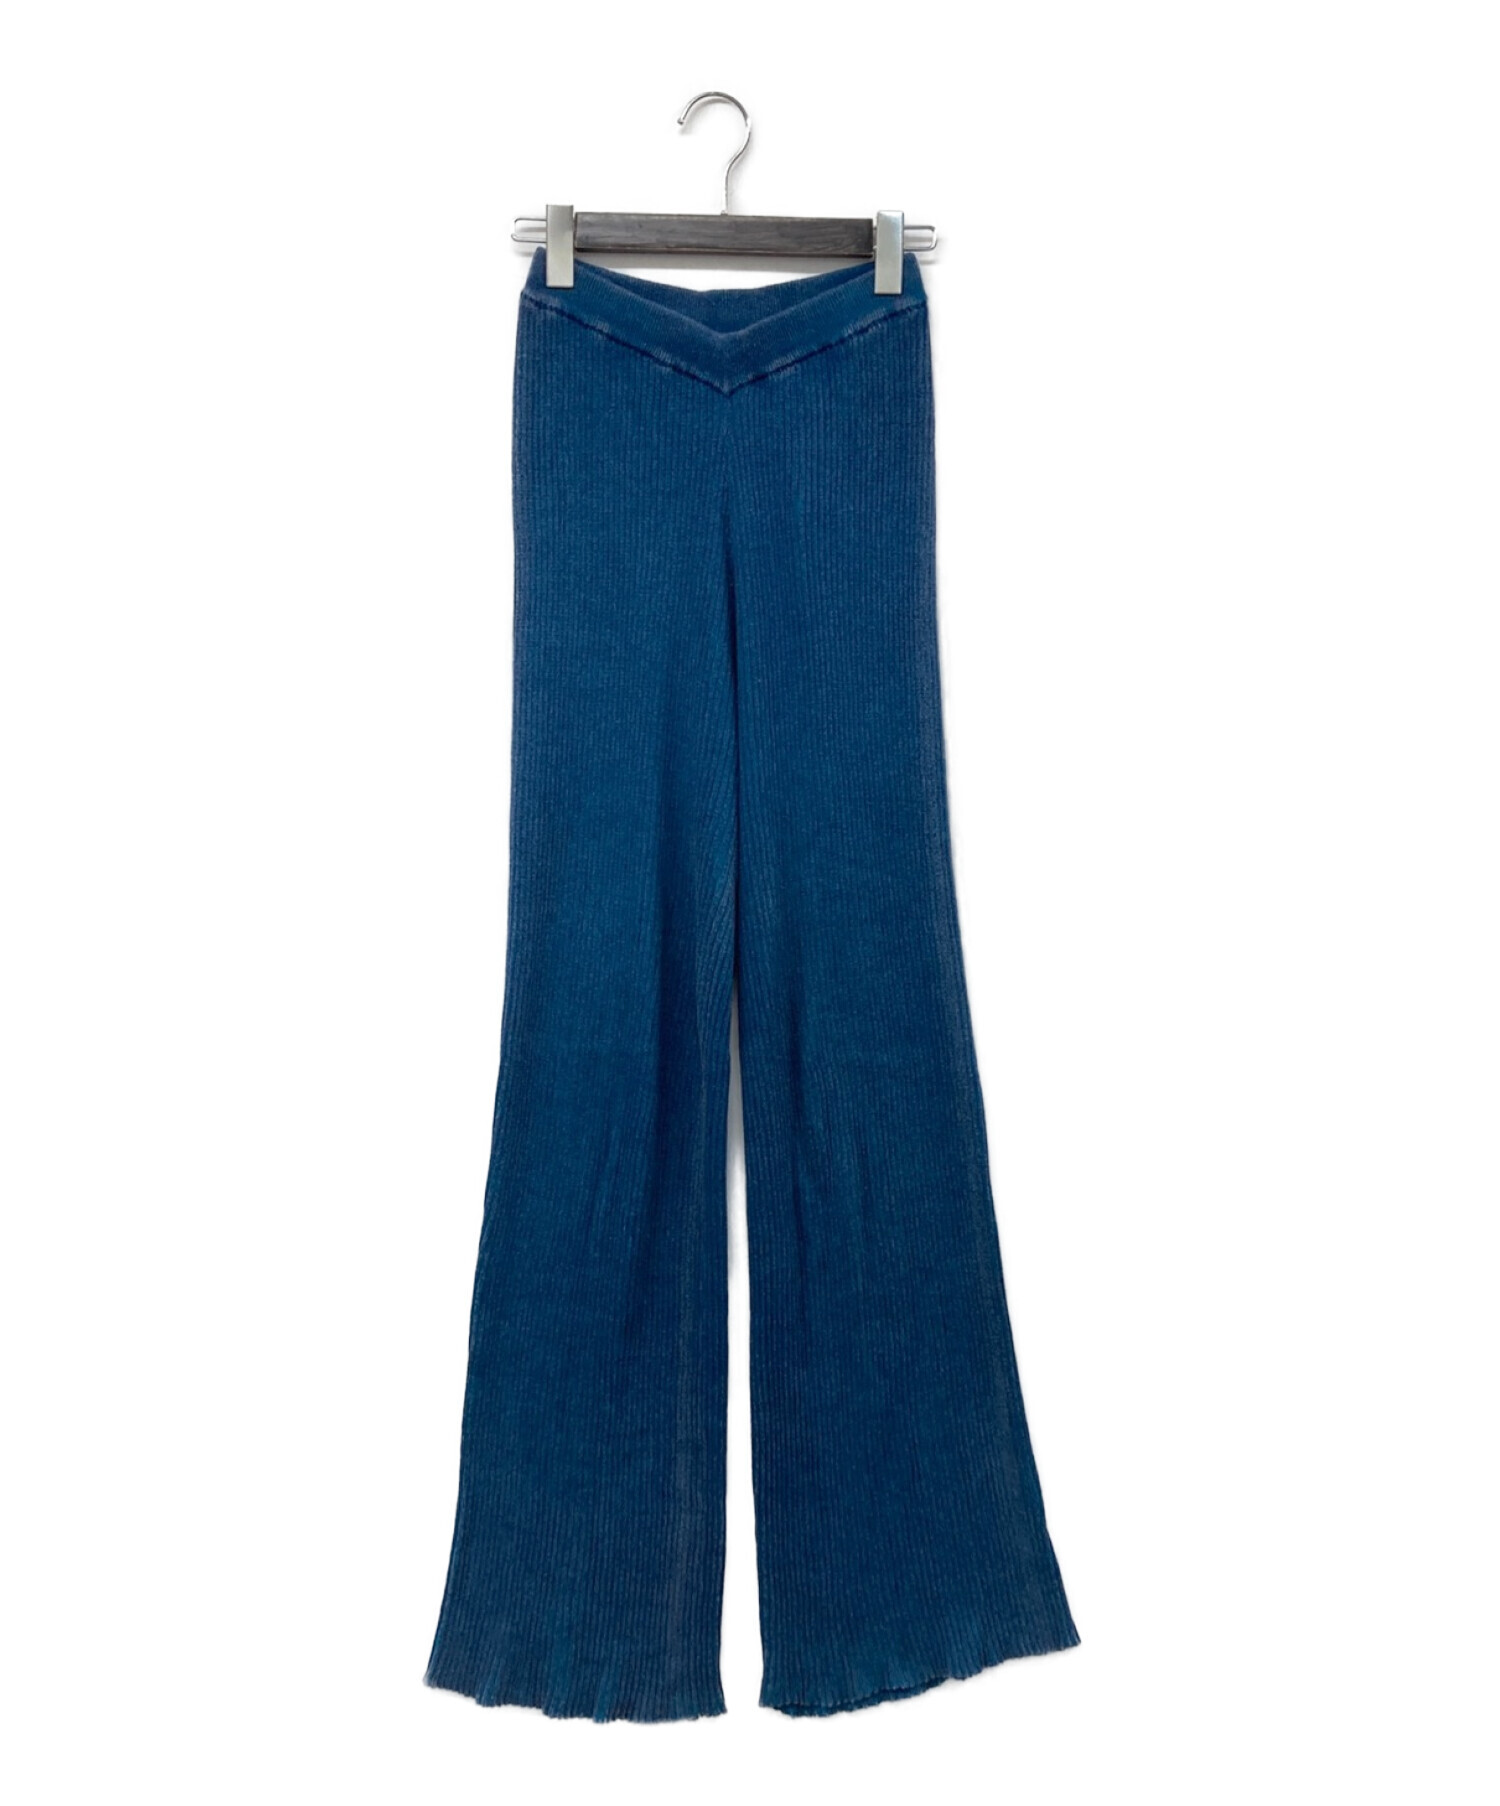 PERVERZE (パーバーズ) Plating Rib Knit Pants プレーティングリブニットパンツ ブルー サイズ:F 未使用品